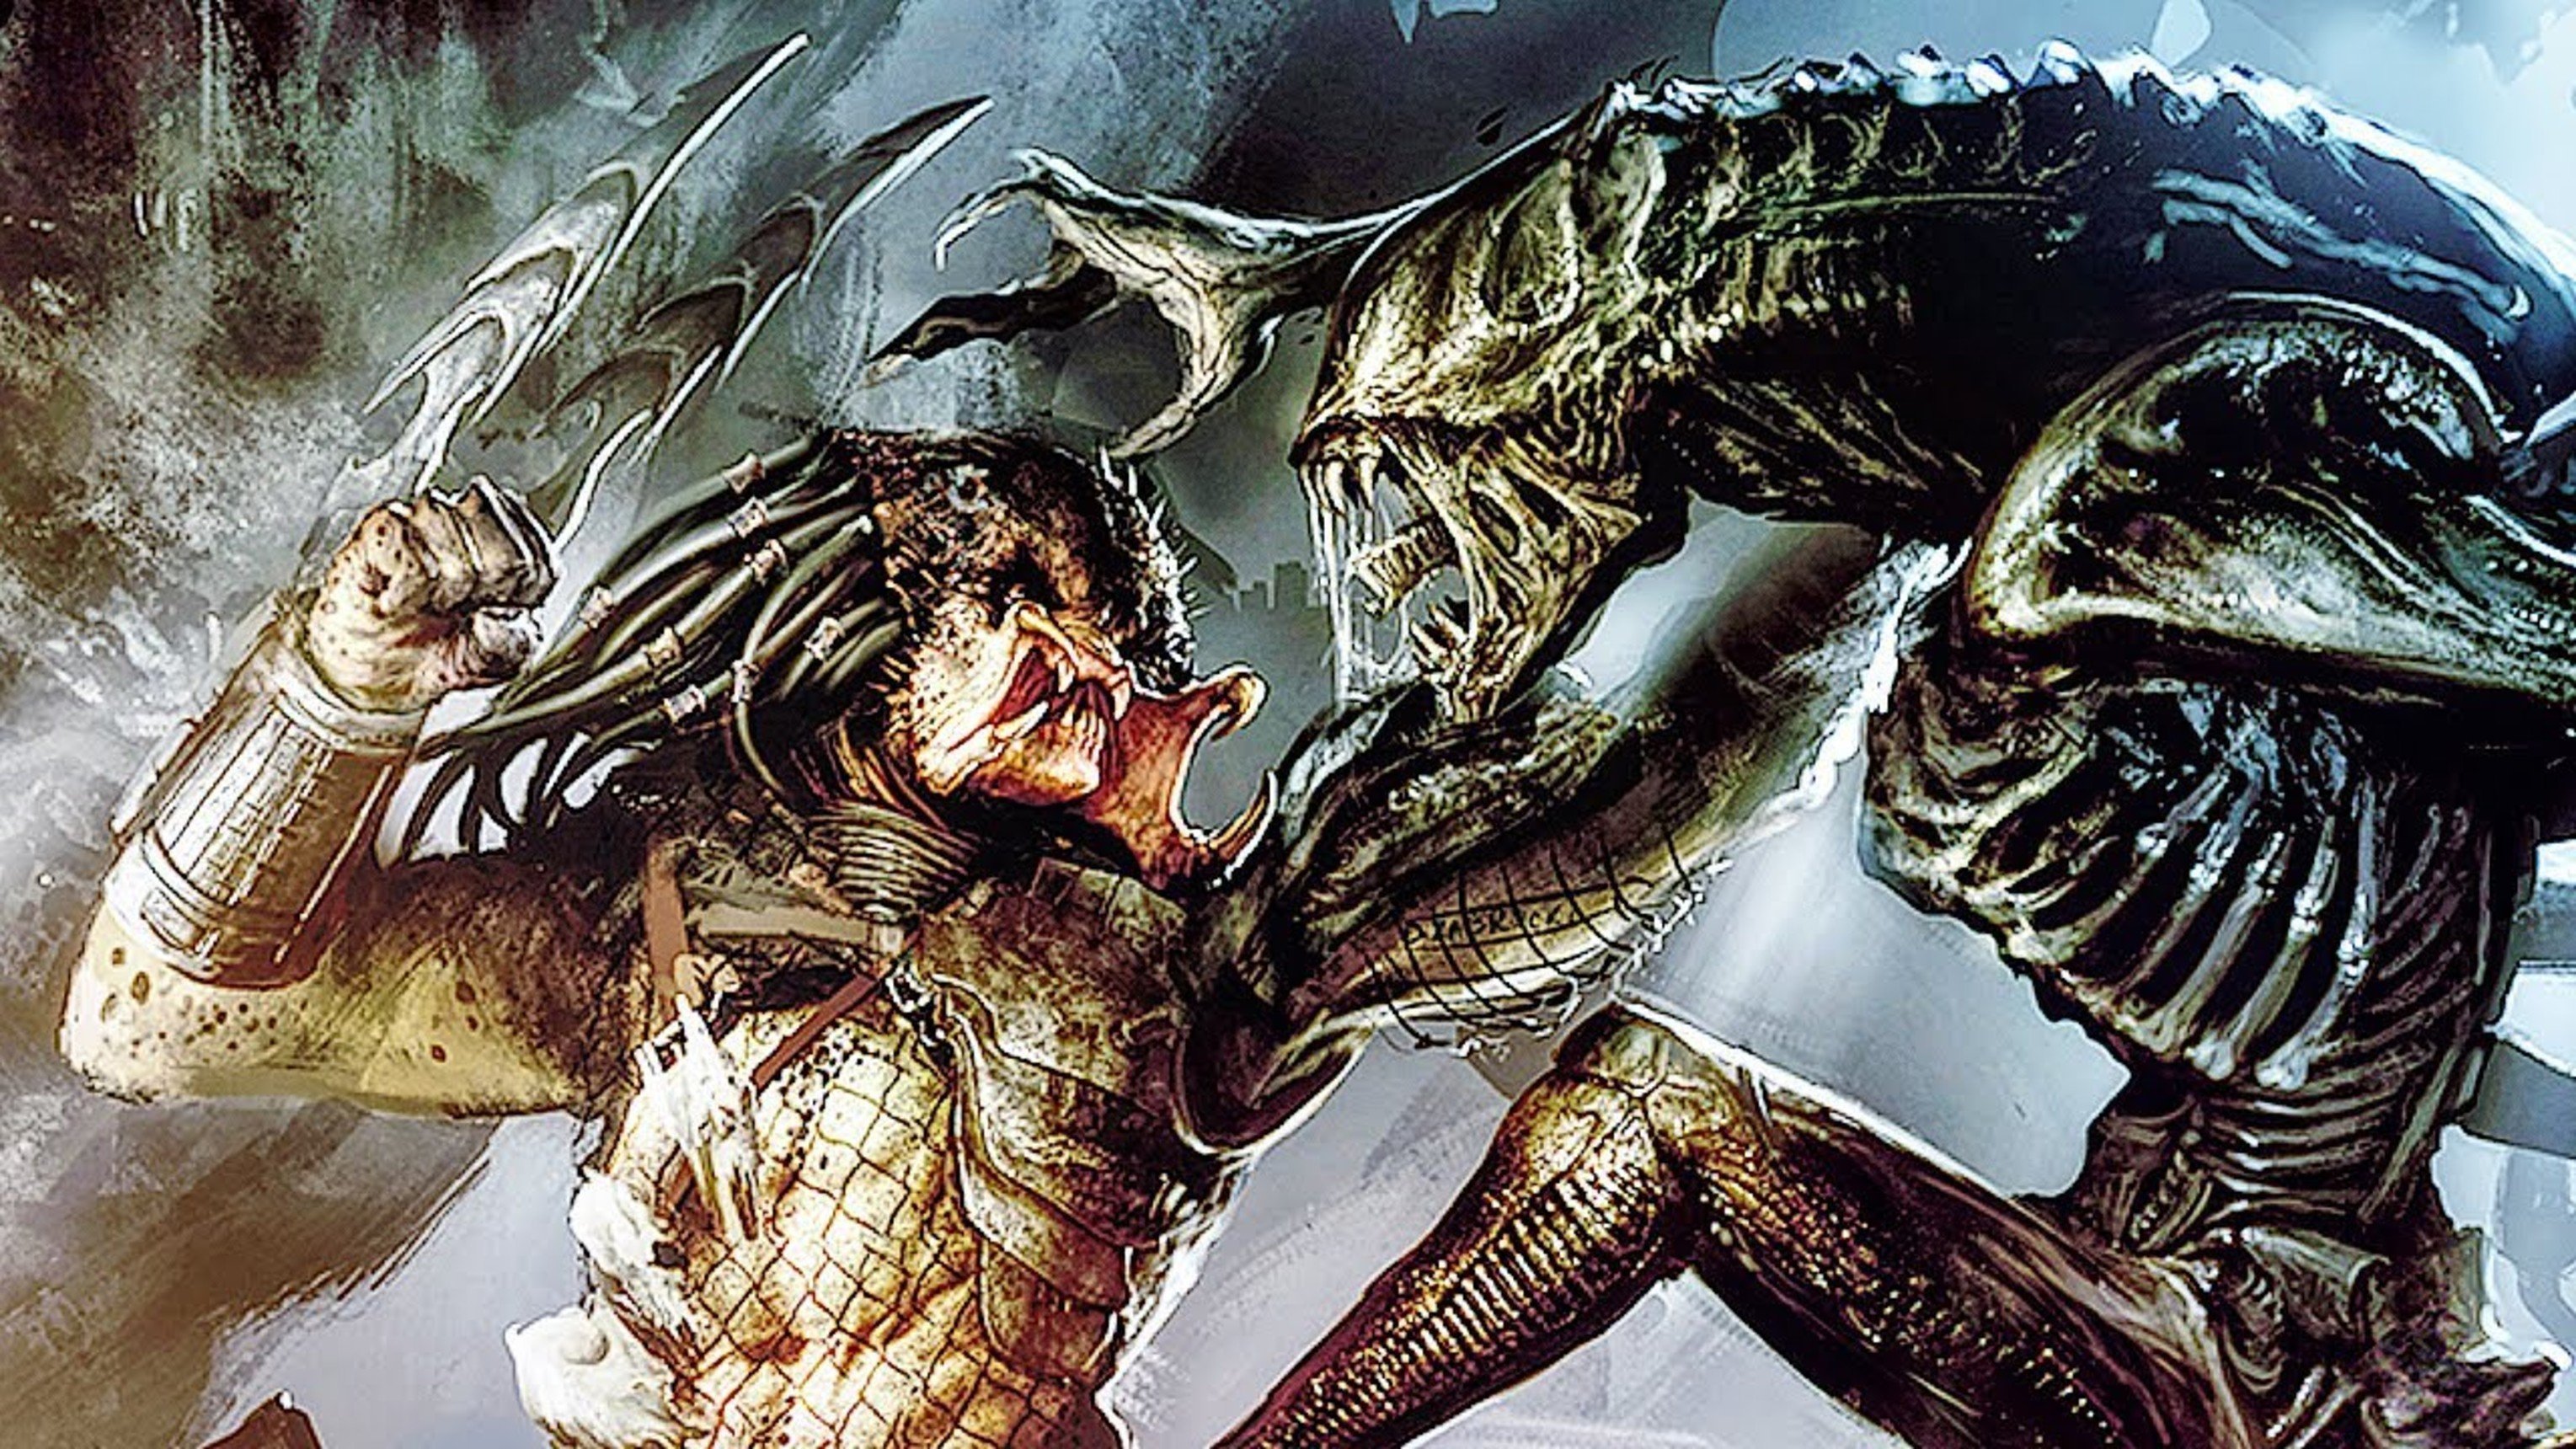 Portades: ‘Alien vs. Predator’ acaba en foc d’encenalls